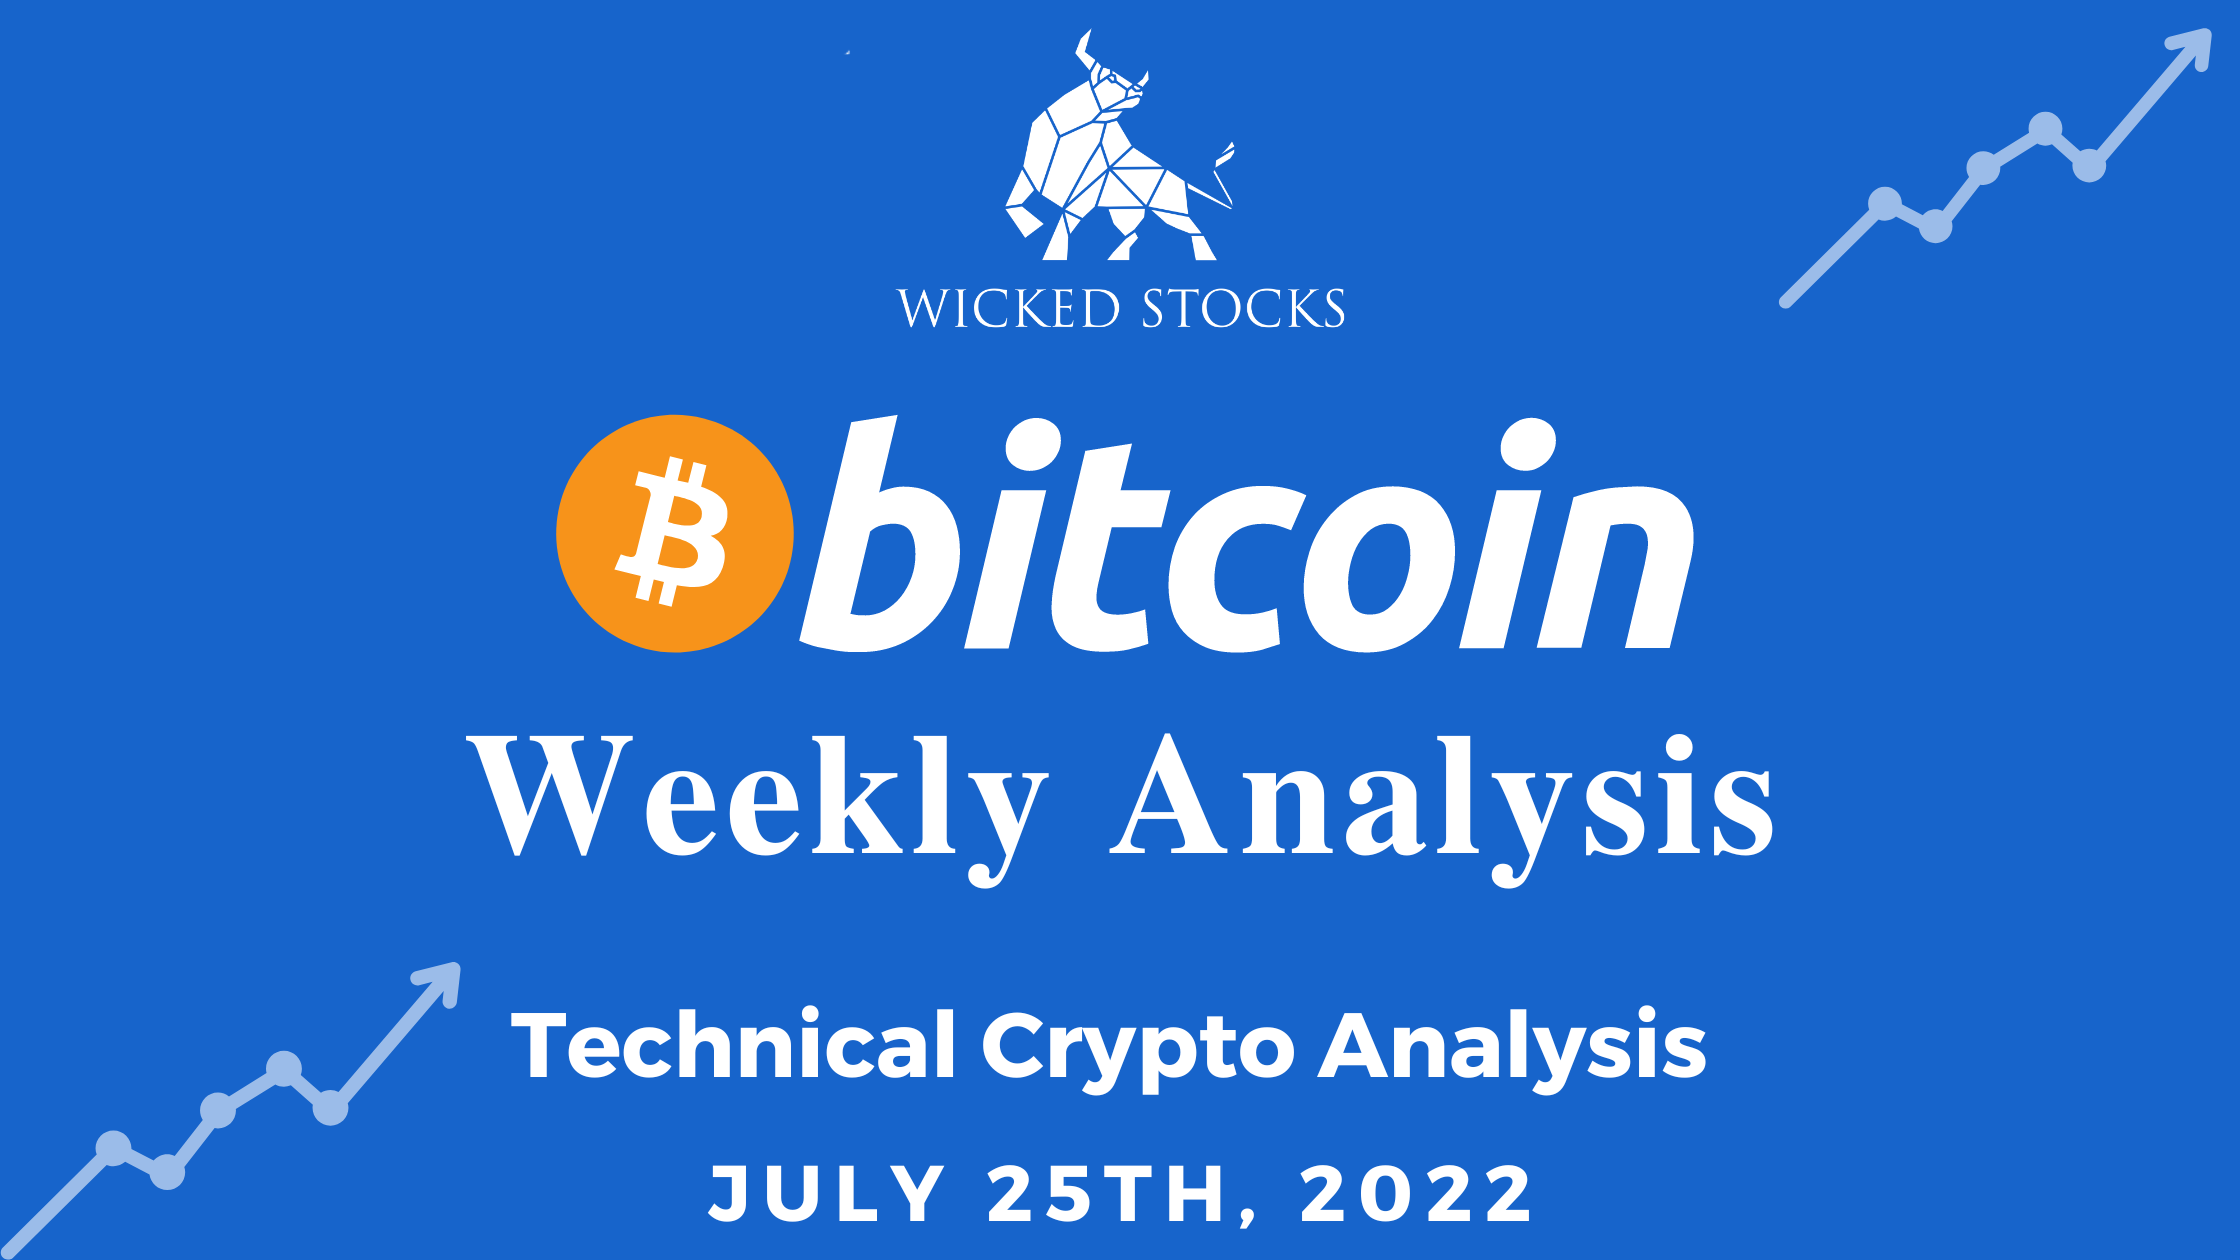 Bitcoin (BTC) Weekly Analysis 7/25/22